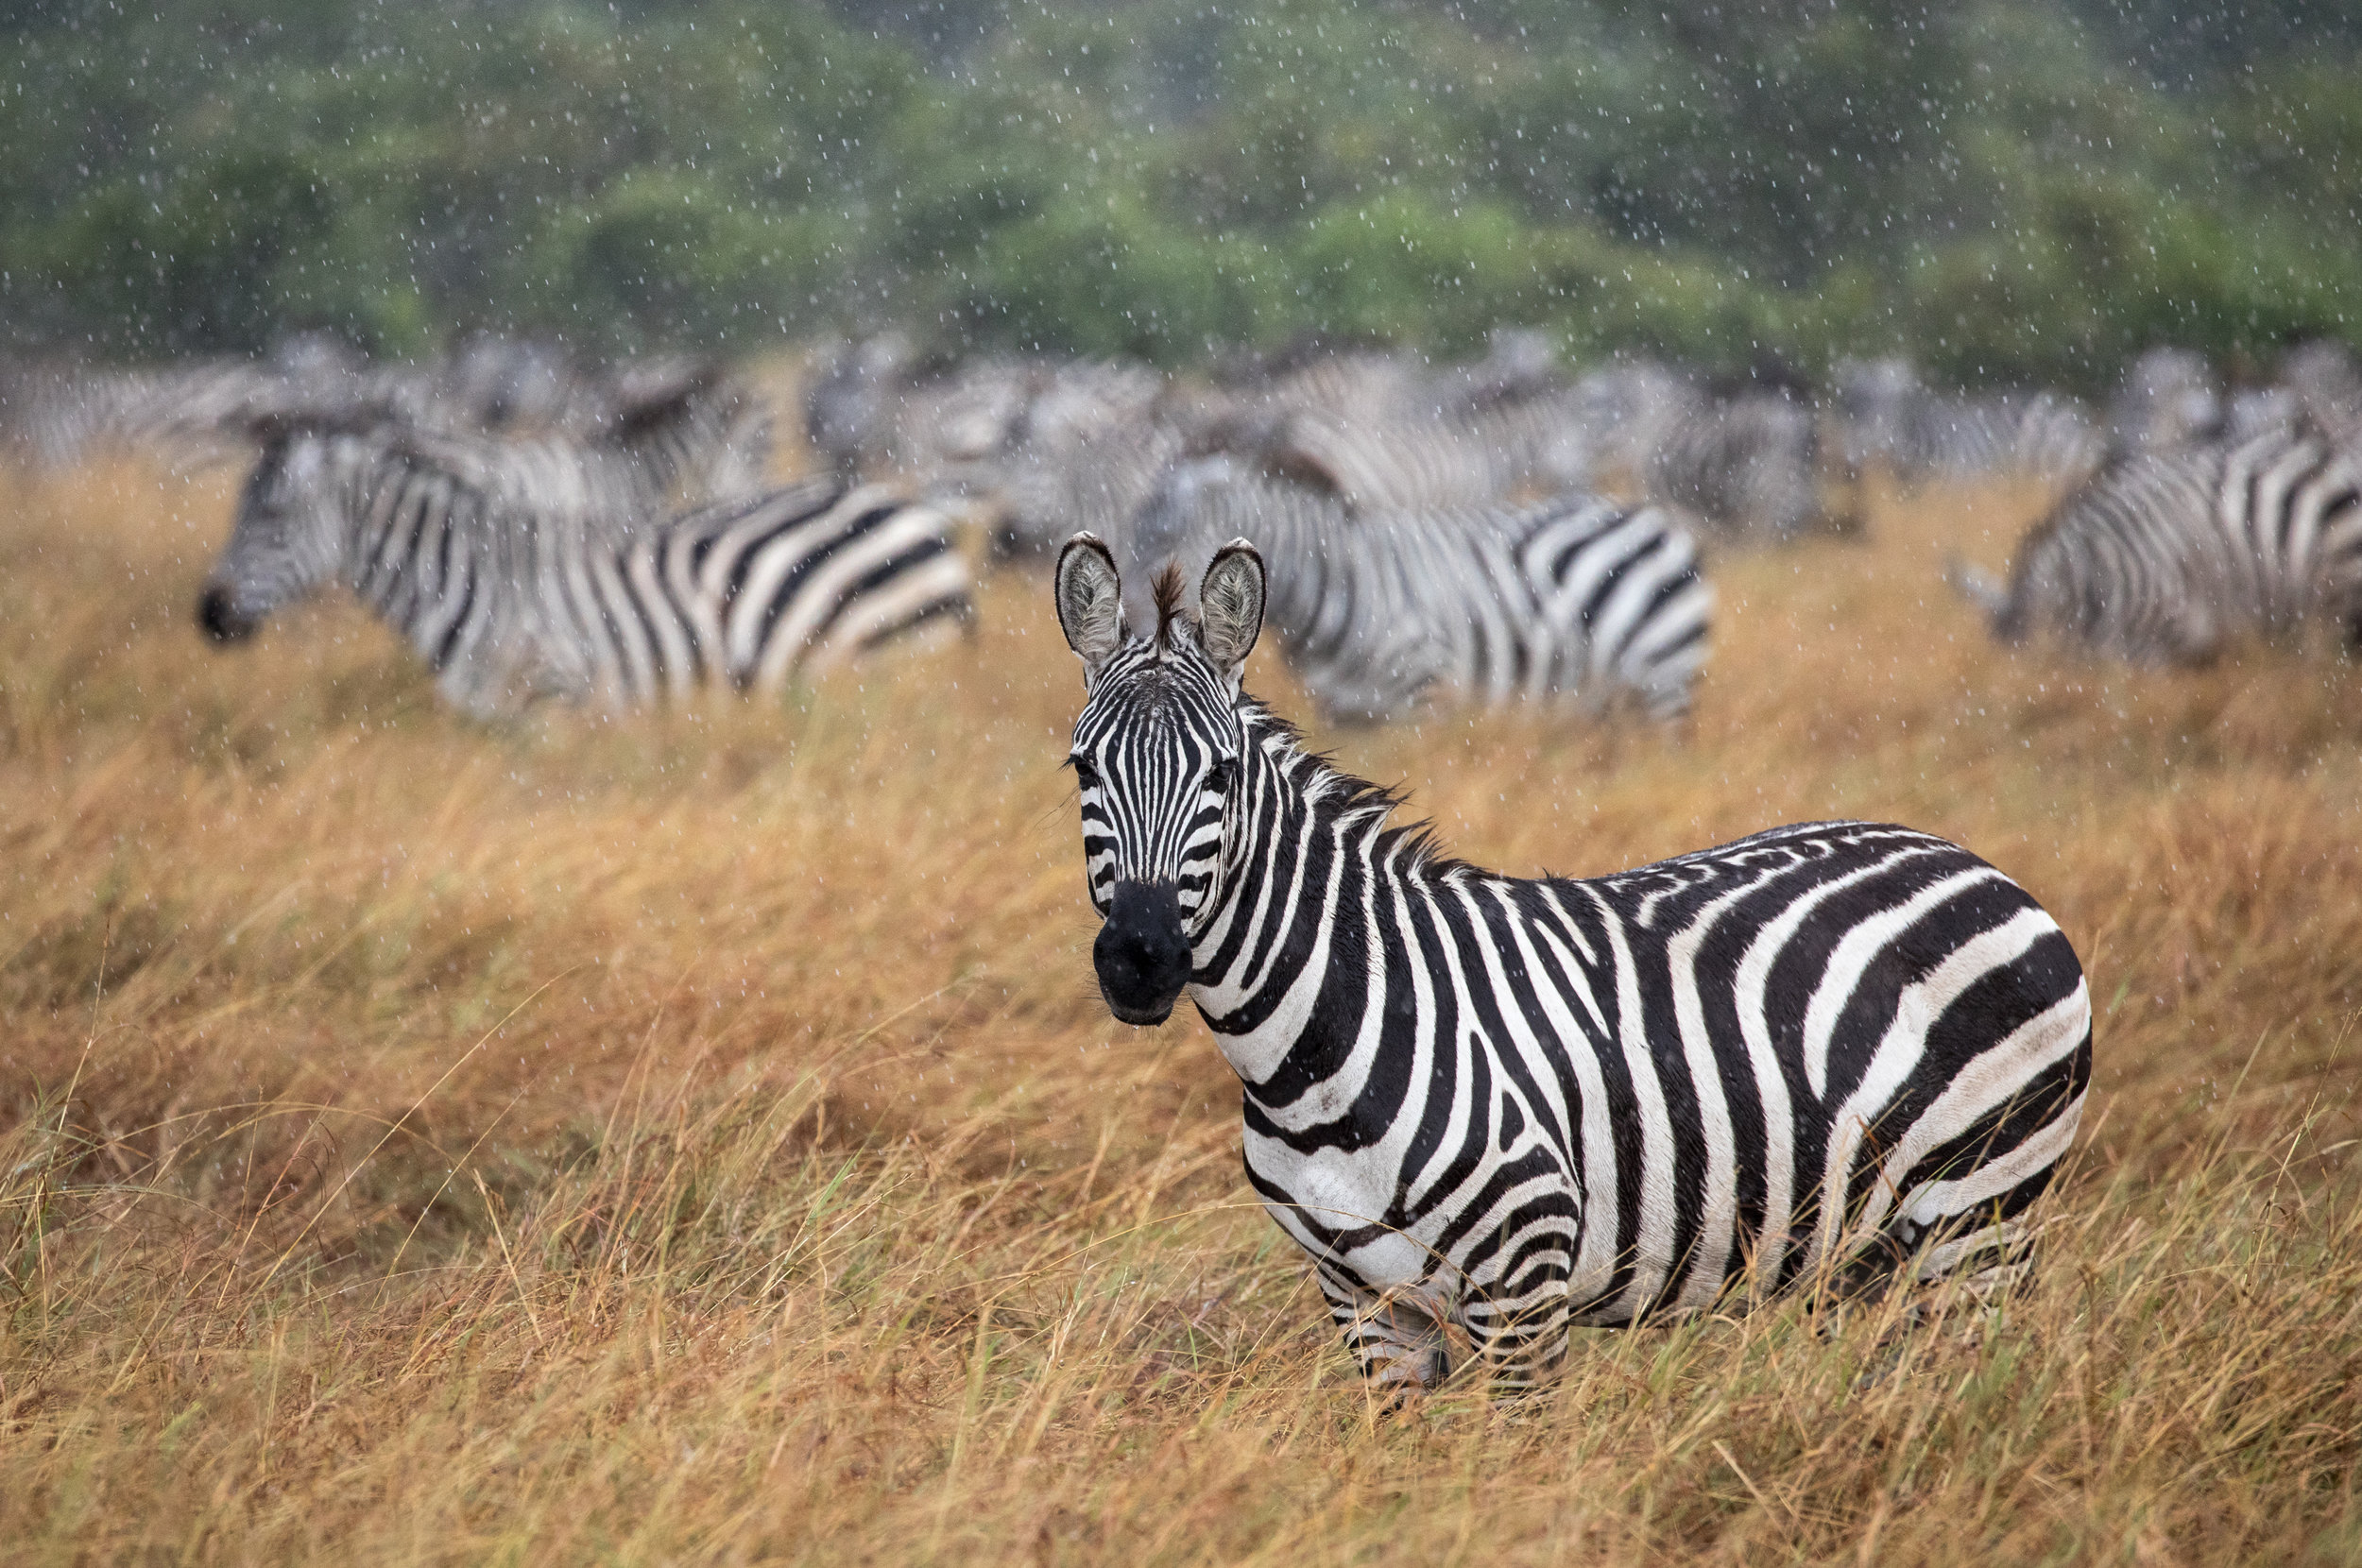   Maasai Mara, Kenya  - Rain falls on a herd of zebras in the Maasai Mara. 